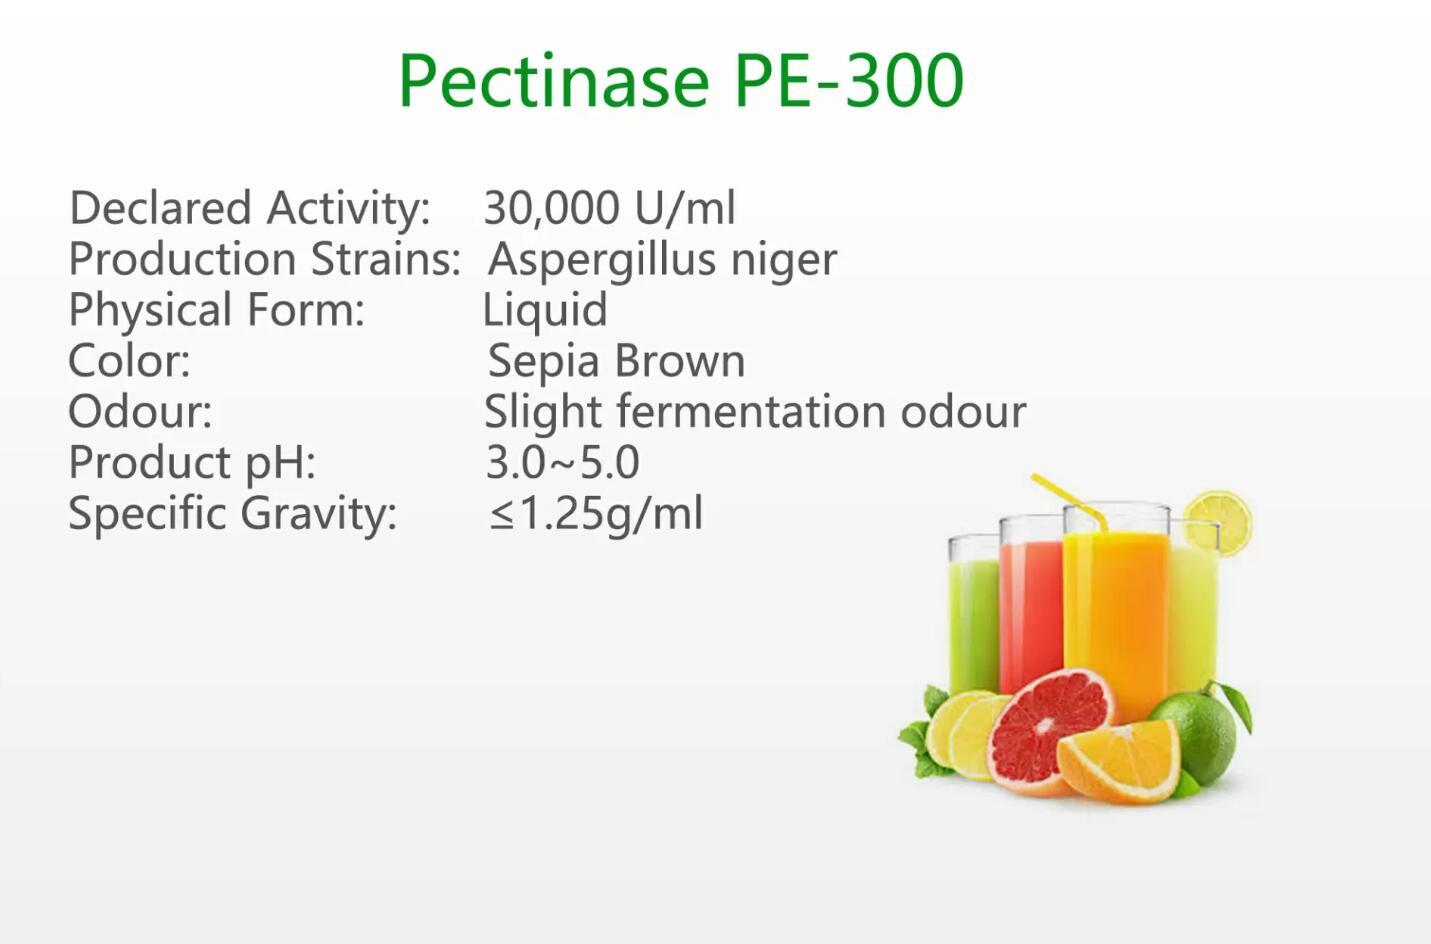 Pectinase PE-300